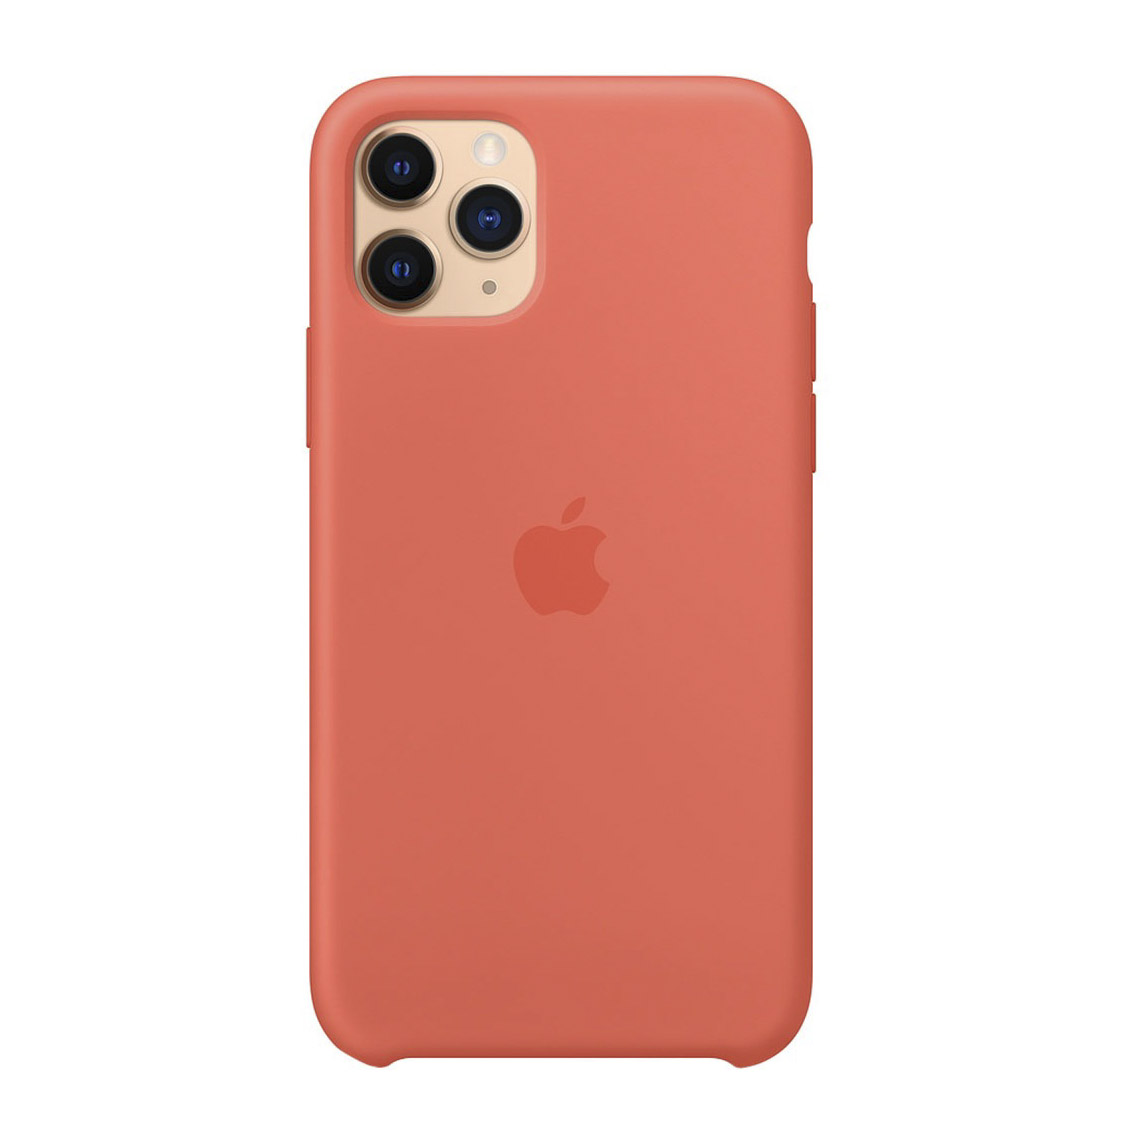 Чехол для смартфона Apple iPhone 11 Pro Max Silicone Case, оранжевый - фото 1